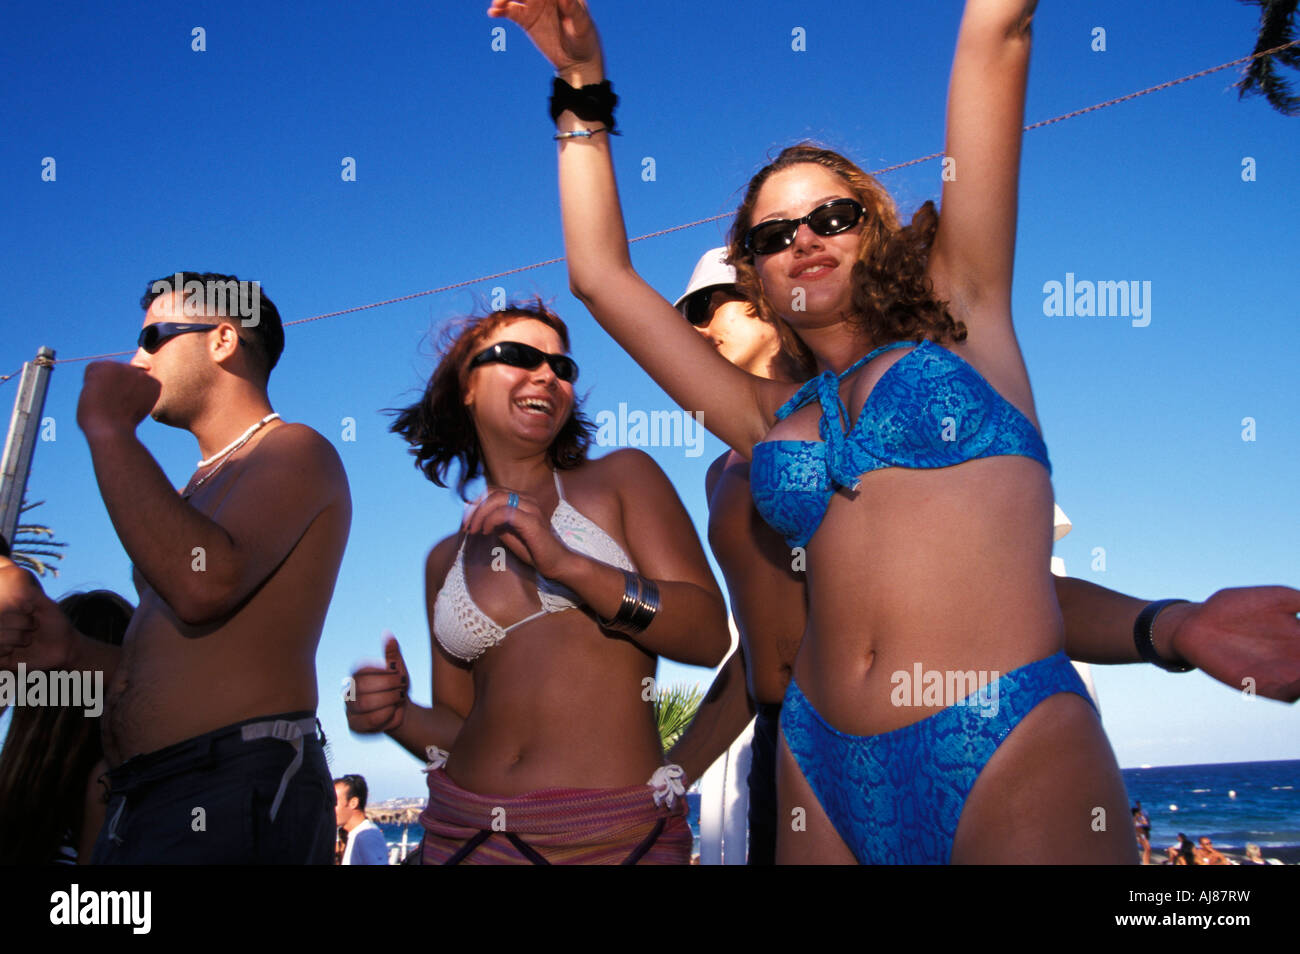 Woman dancing Bora Bora Beach Disco Platja d en Bossa Ibiza City Ibiza  Balearic Island Spain Stock Photo - Alamy